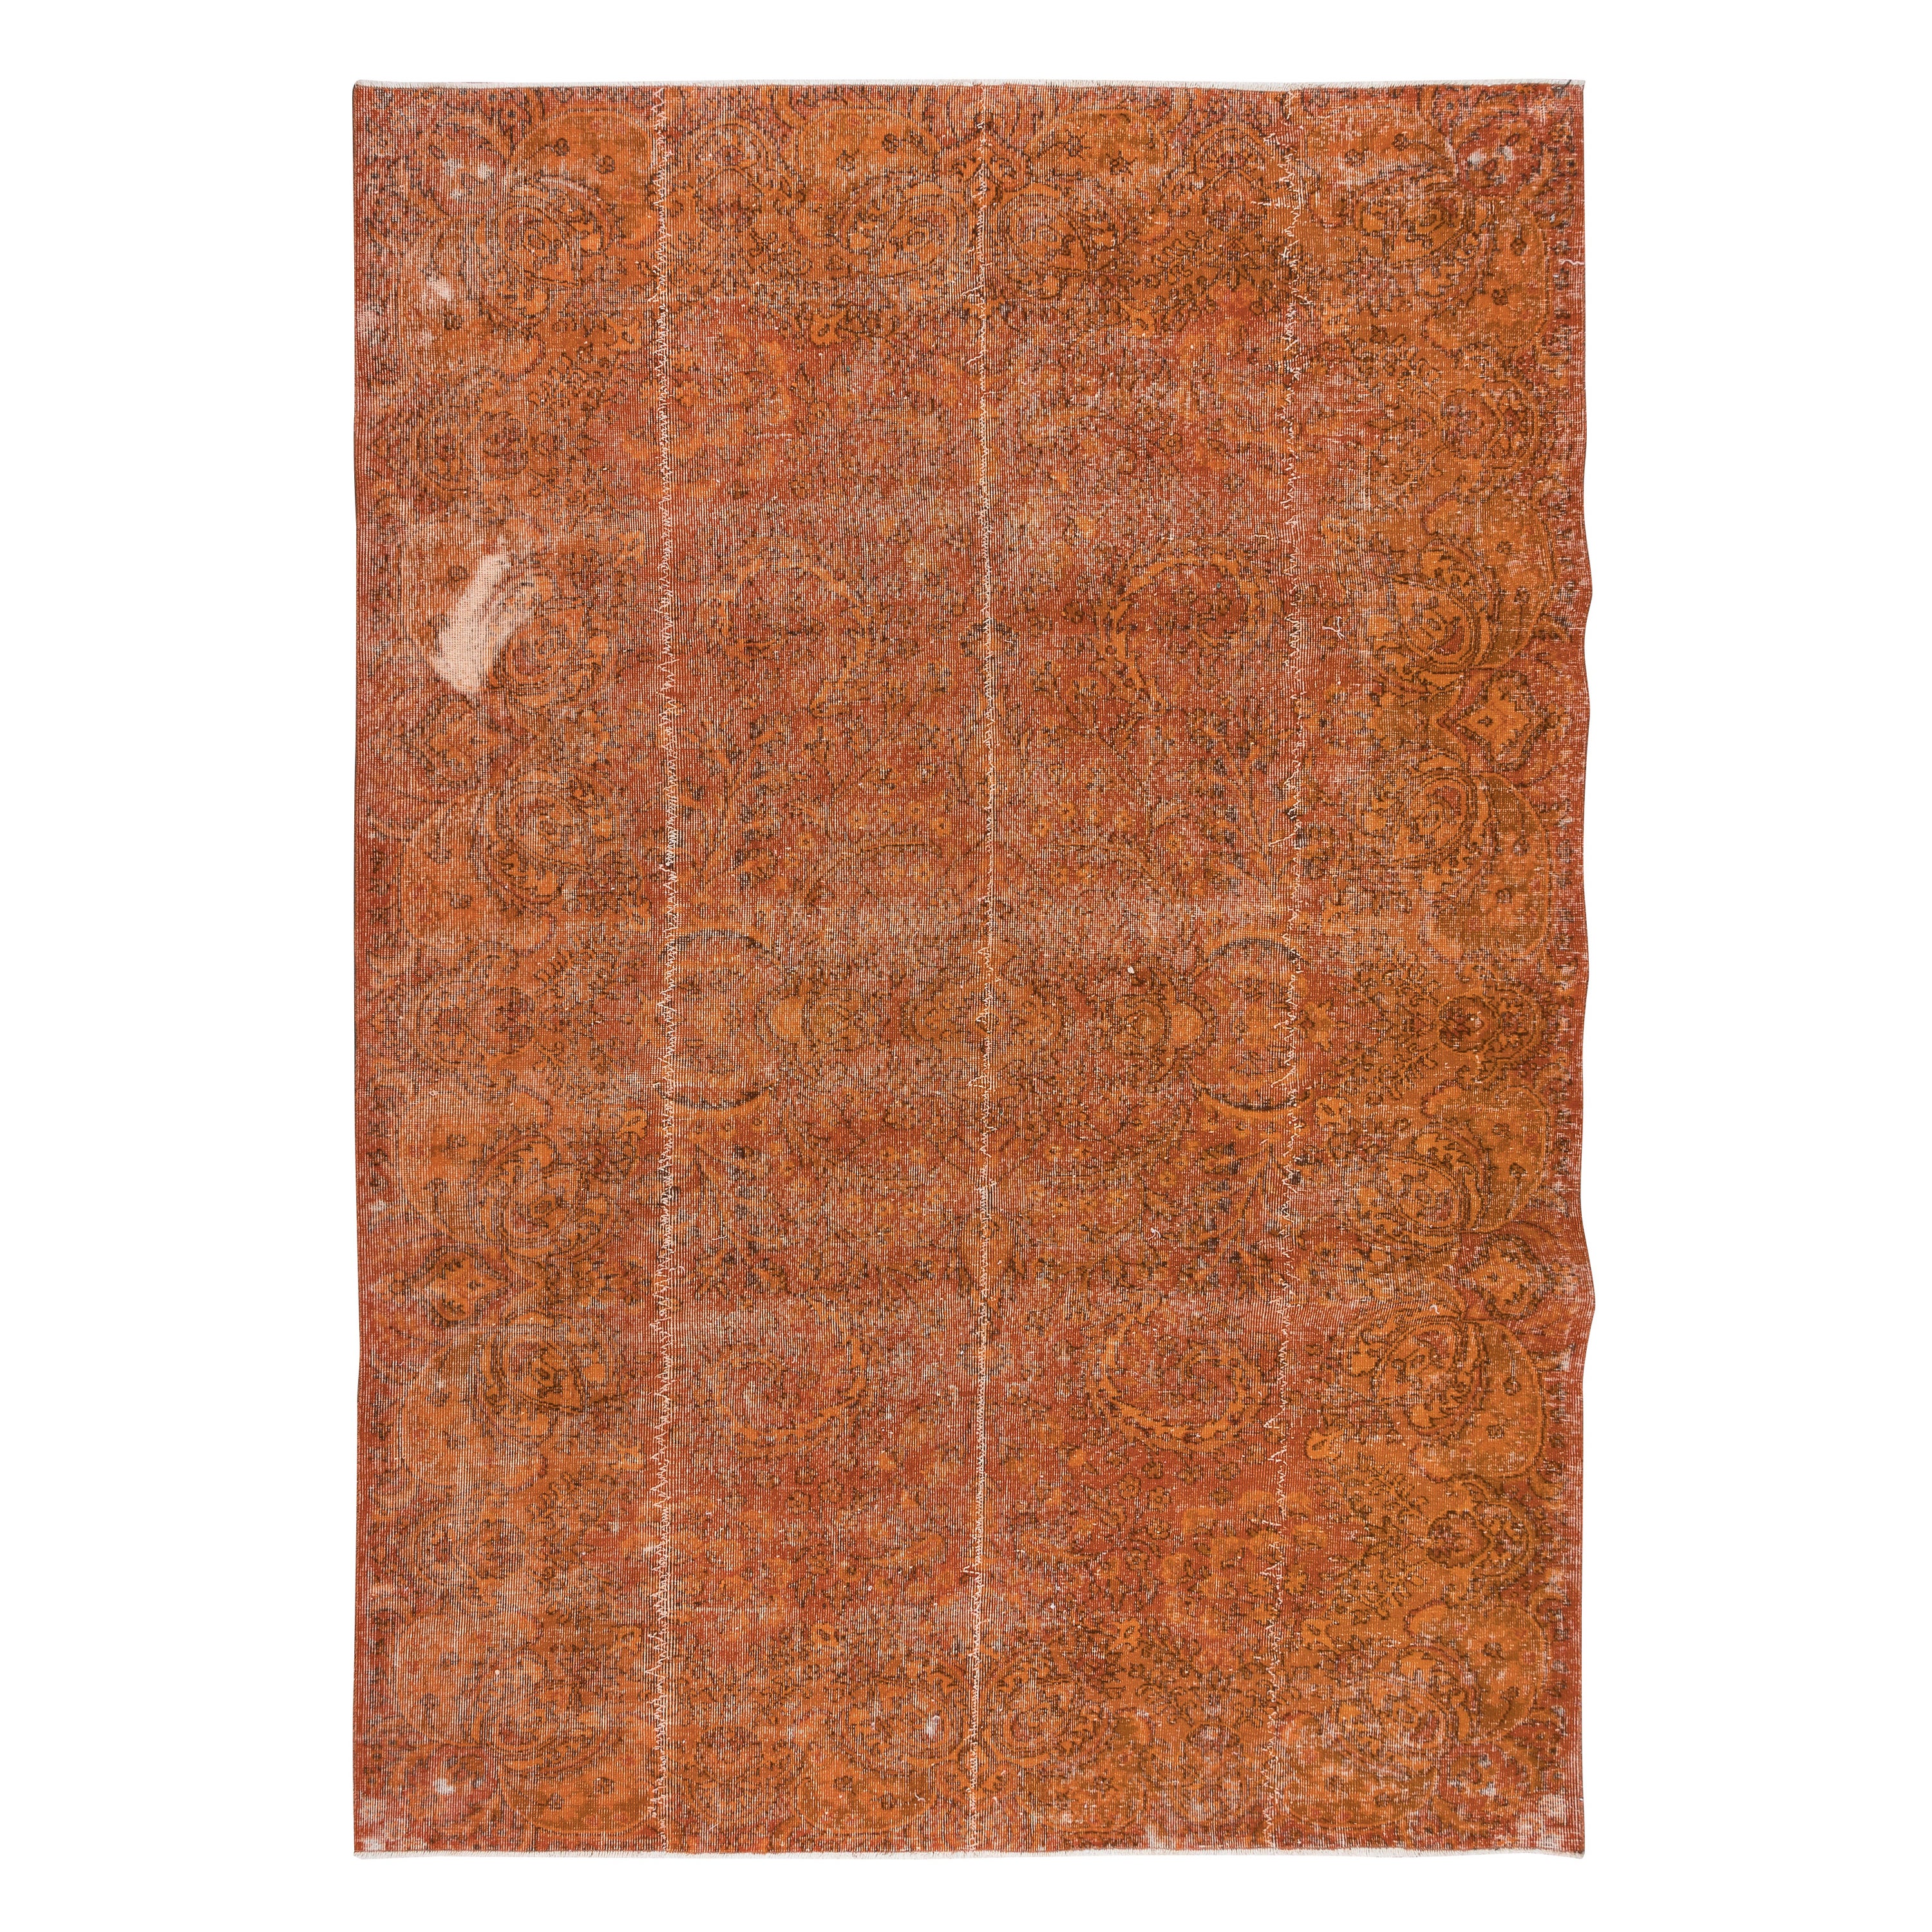 7x10 Ft Orange Handmade Area Rug, Modern Central Anatolian Wool Carpet